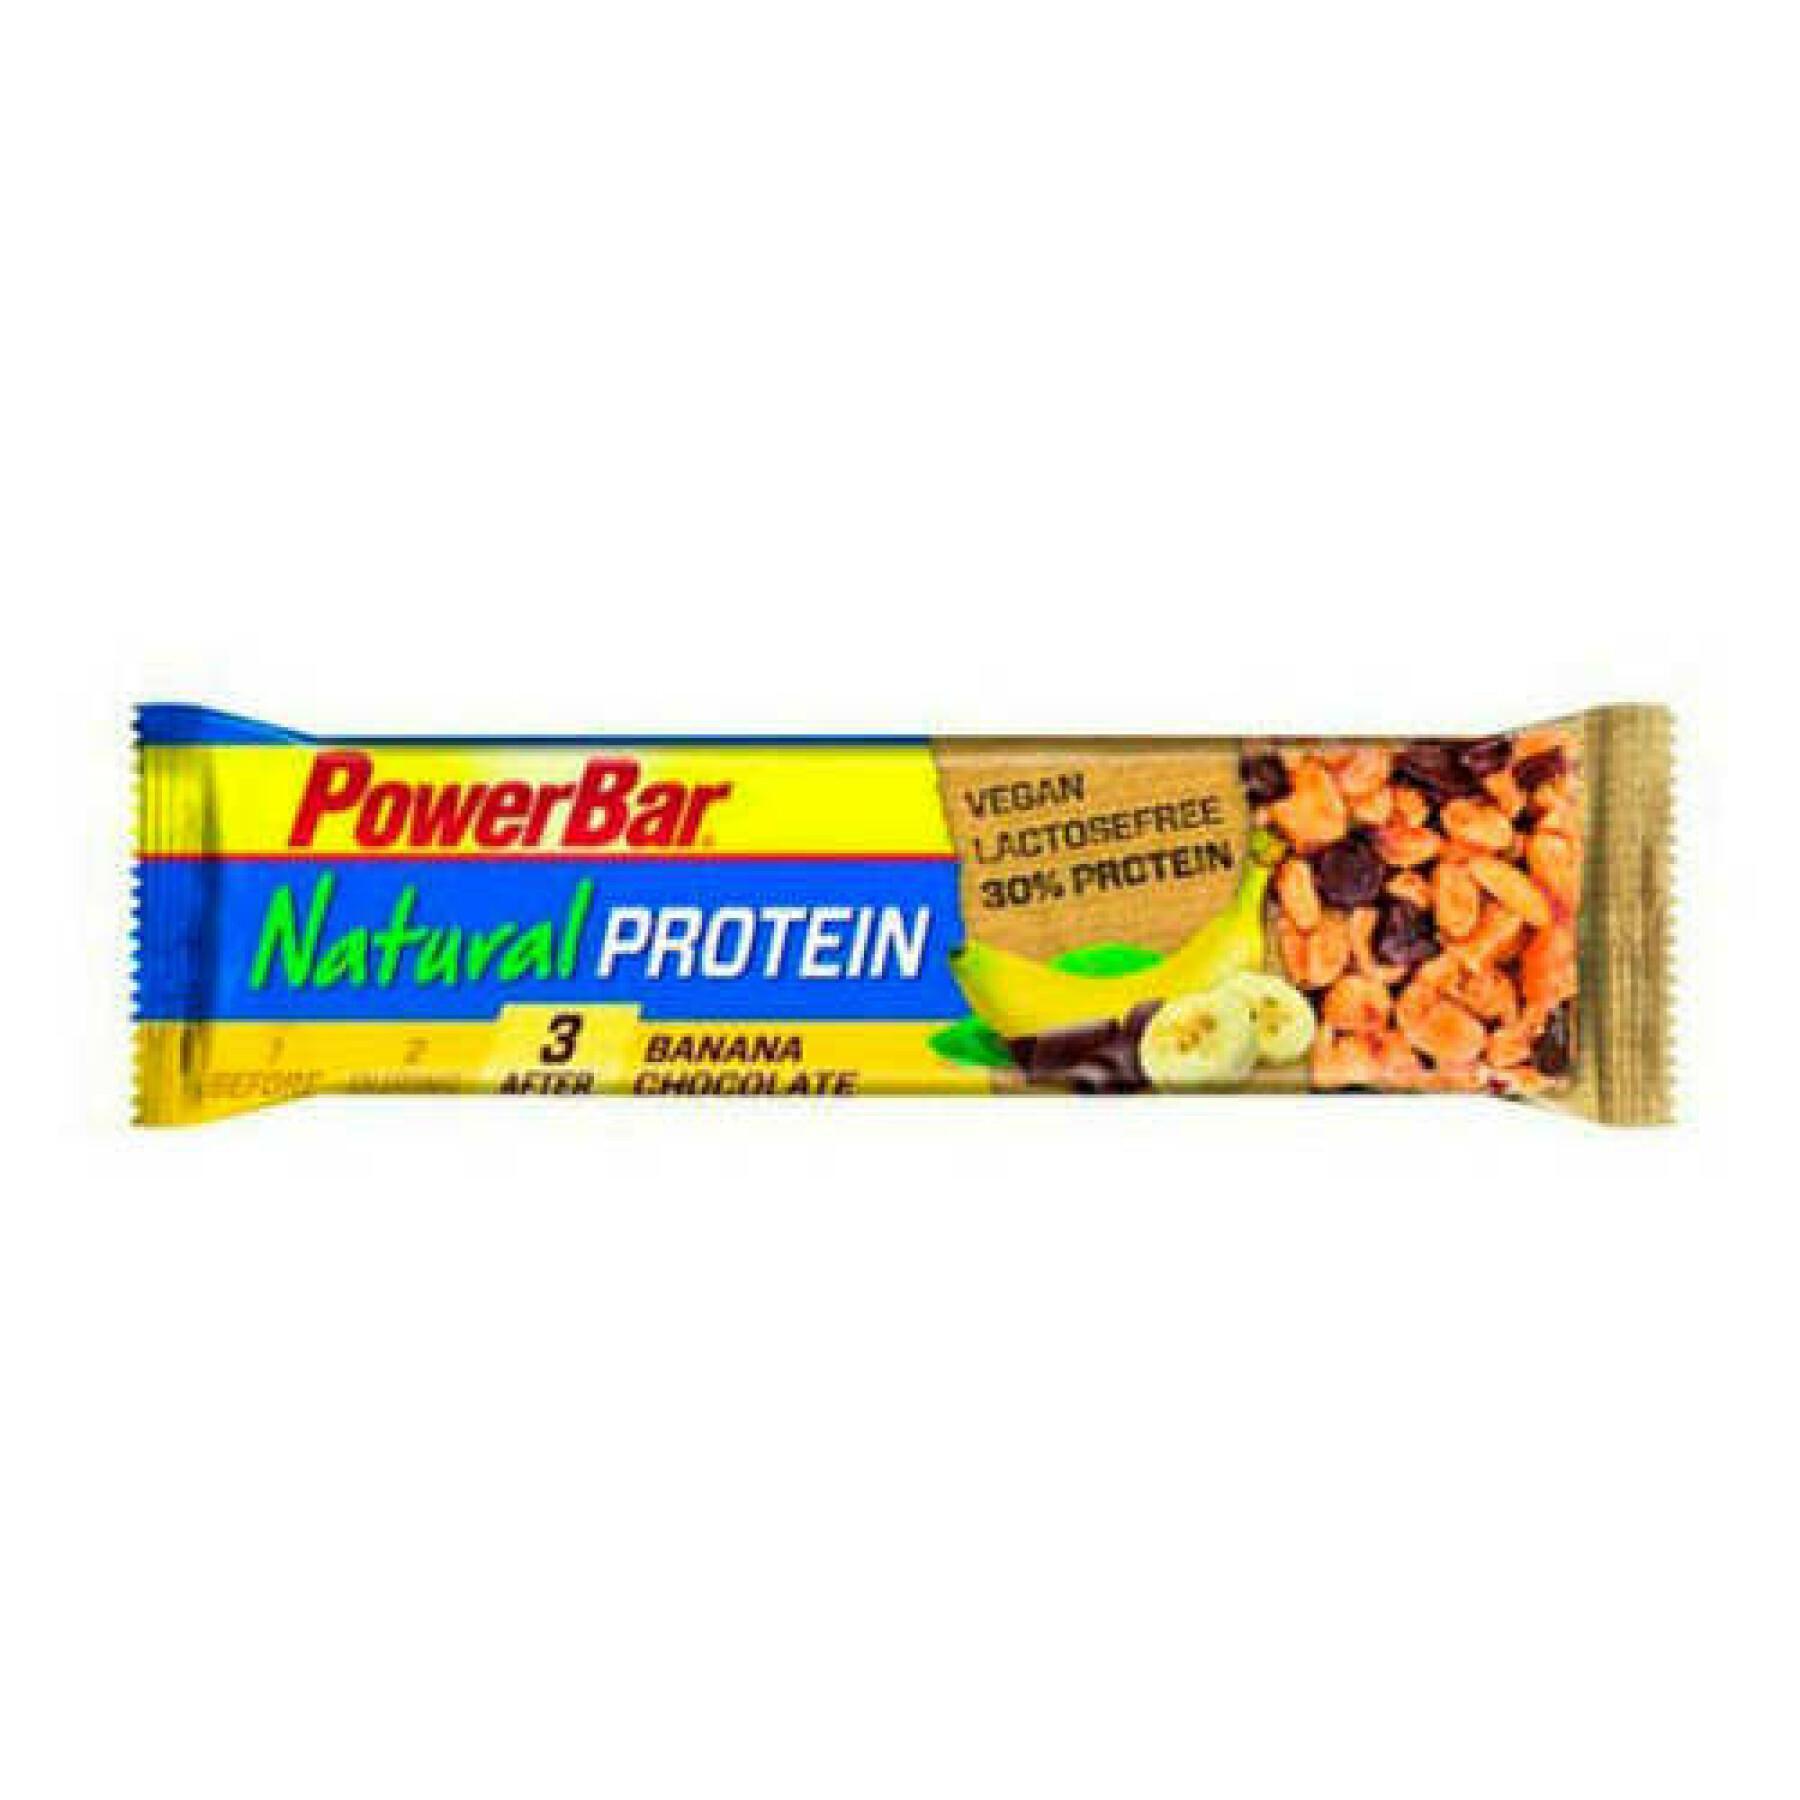 Partia 24 sztabek PowerBar Natural Protein Vegan - Banana Chocolate